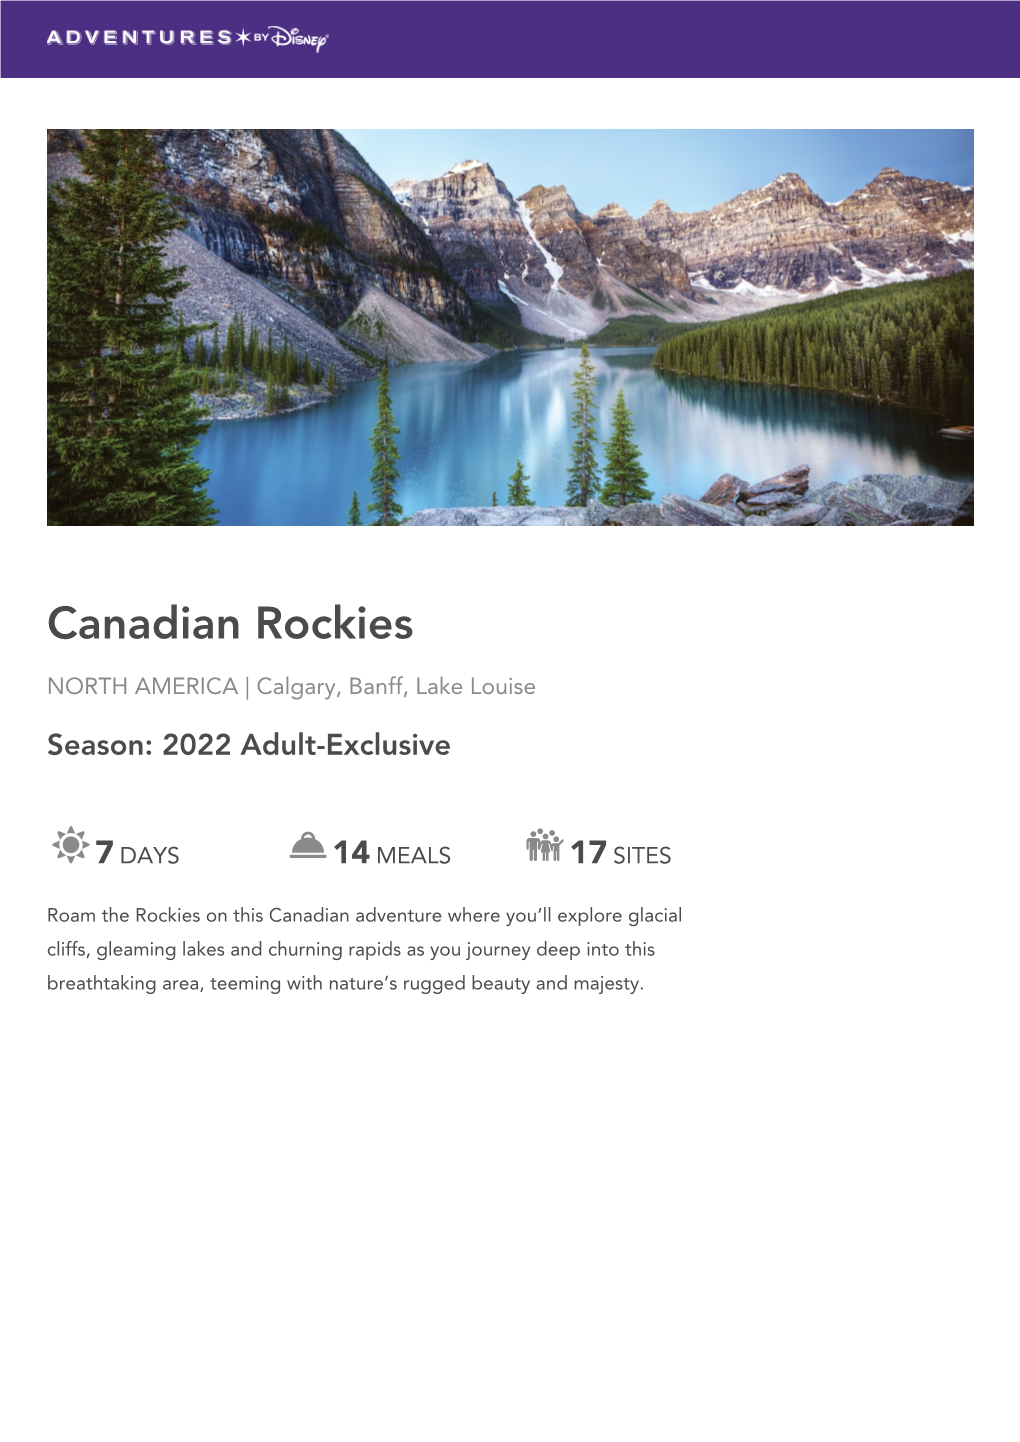 CANADIAN ROCKIES North America | Calgary, Banff, Lake Louise